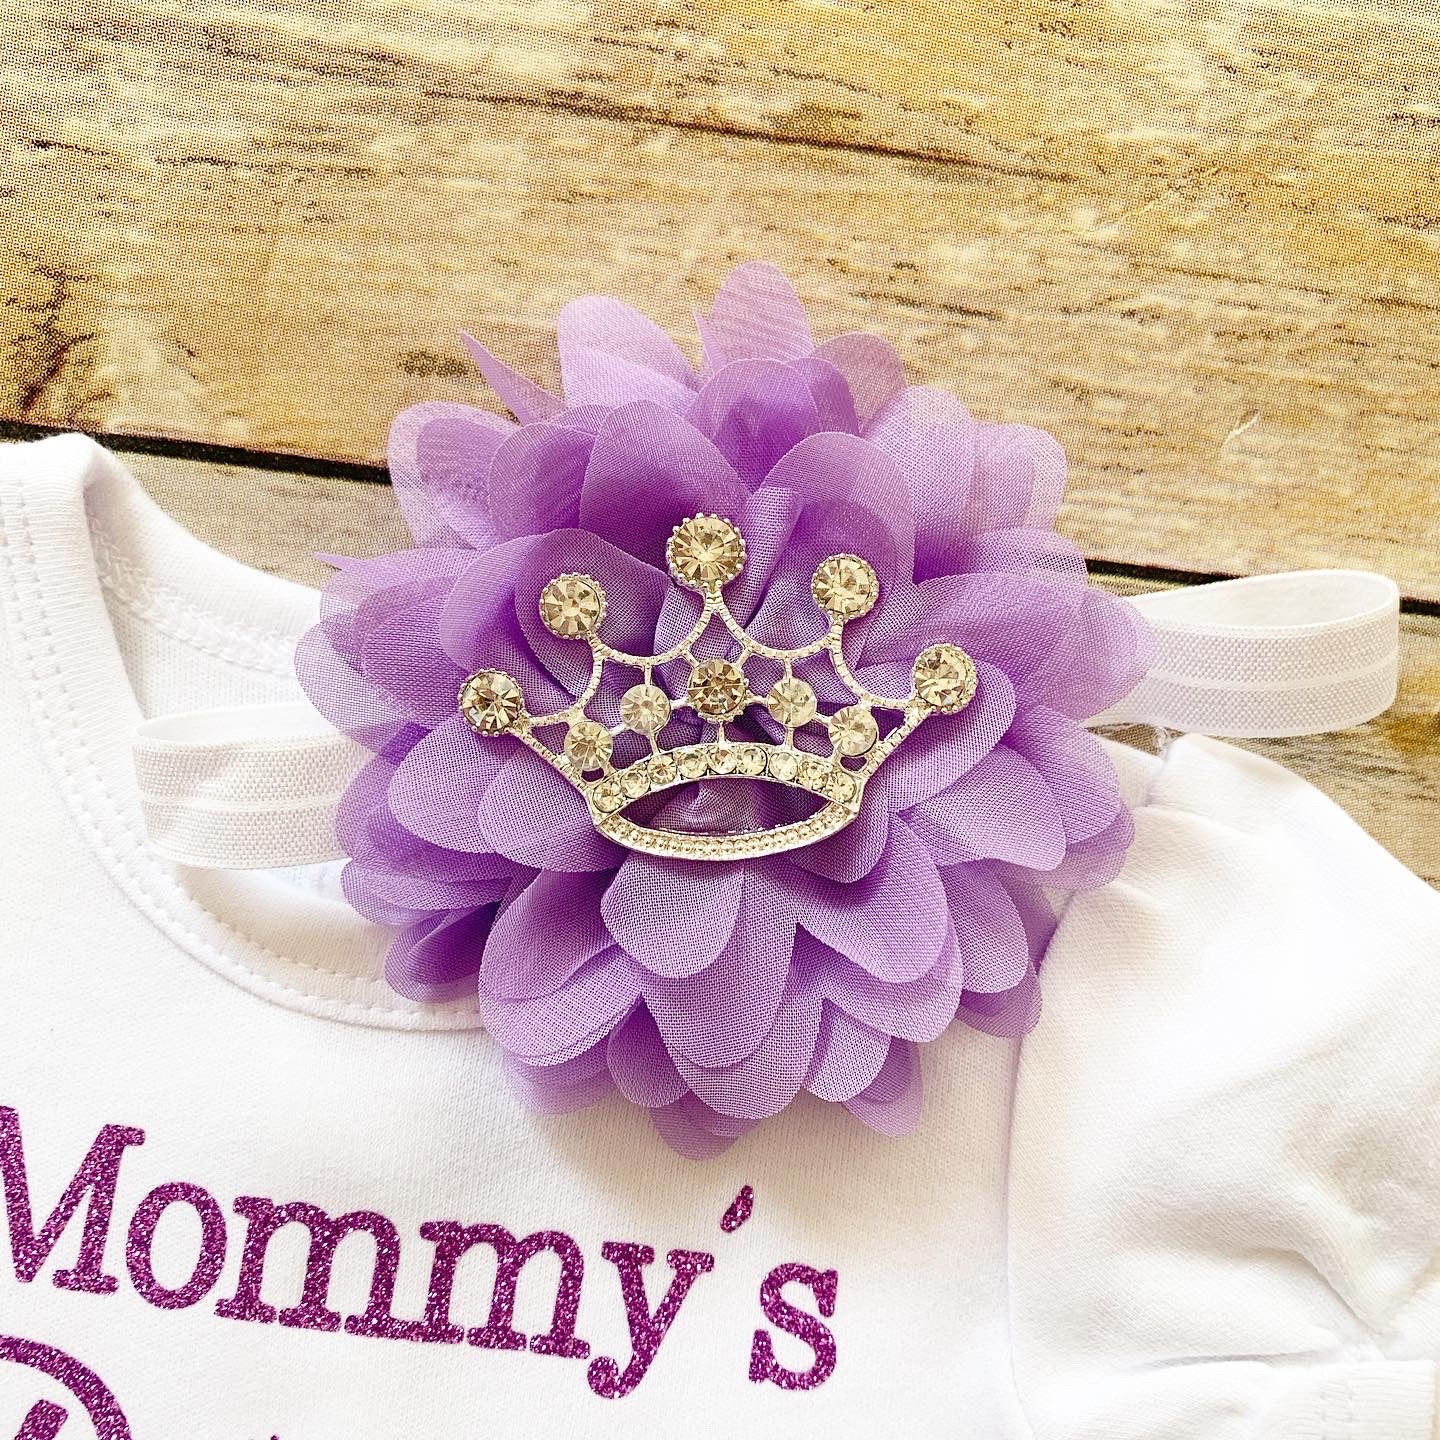 Mommy’s princess- lavender